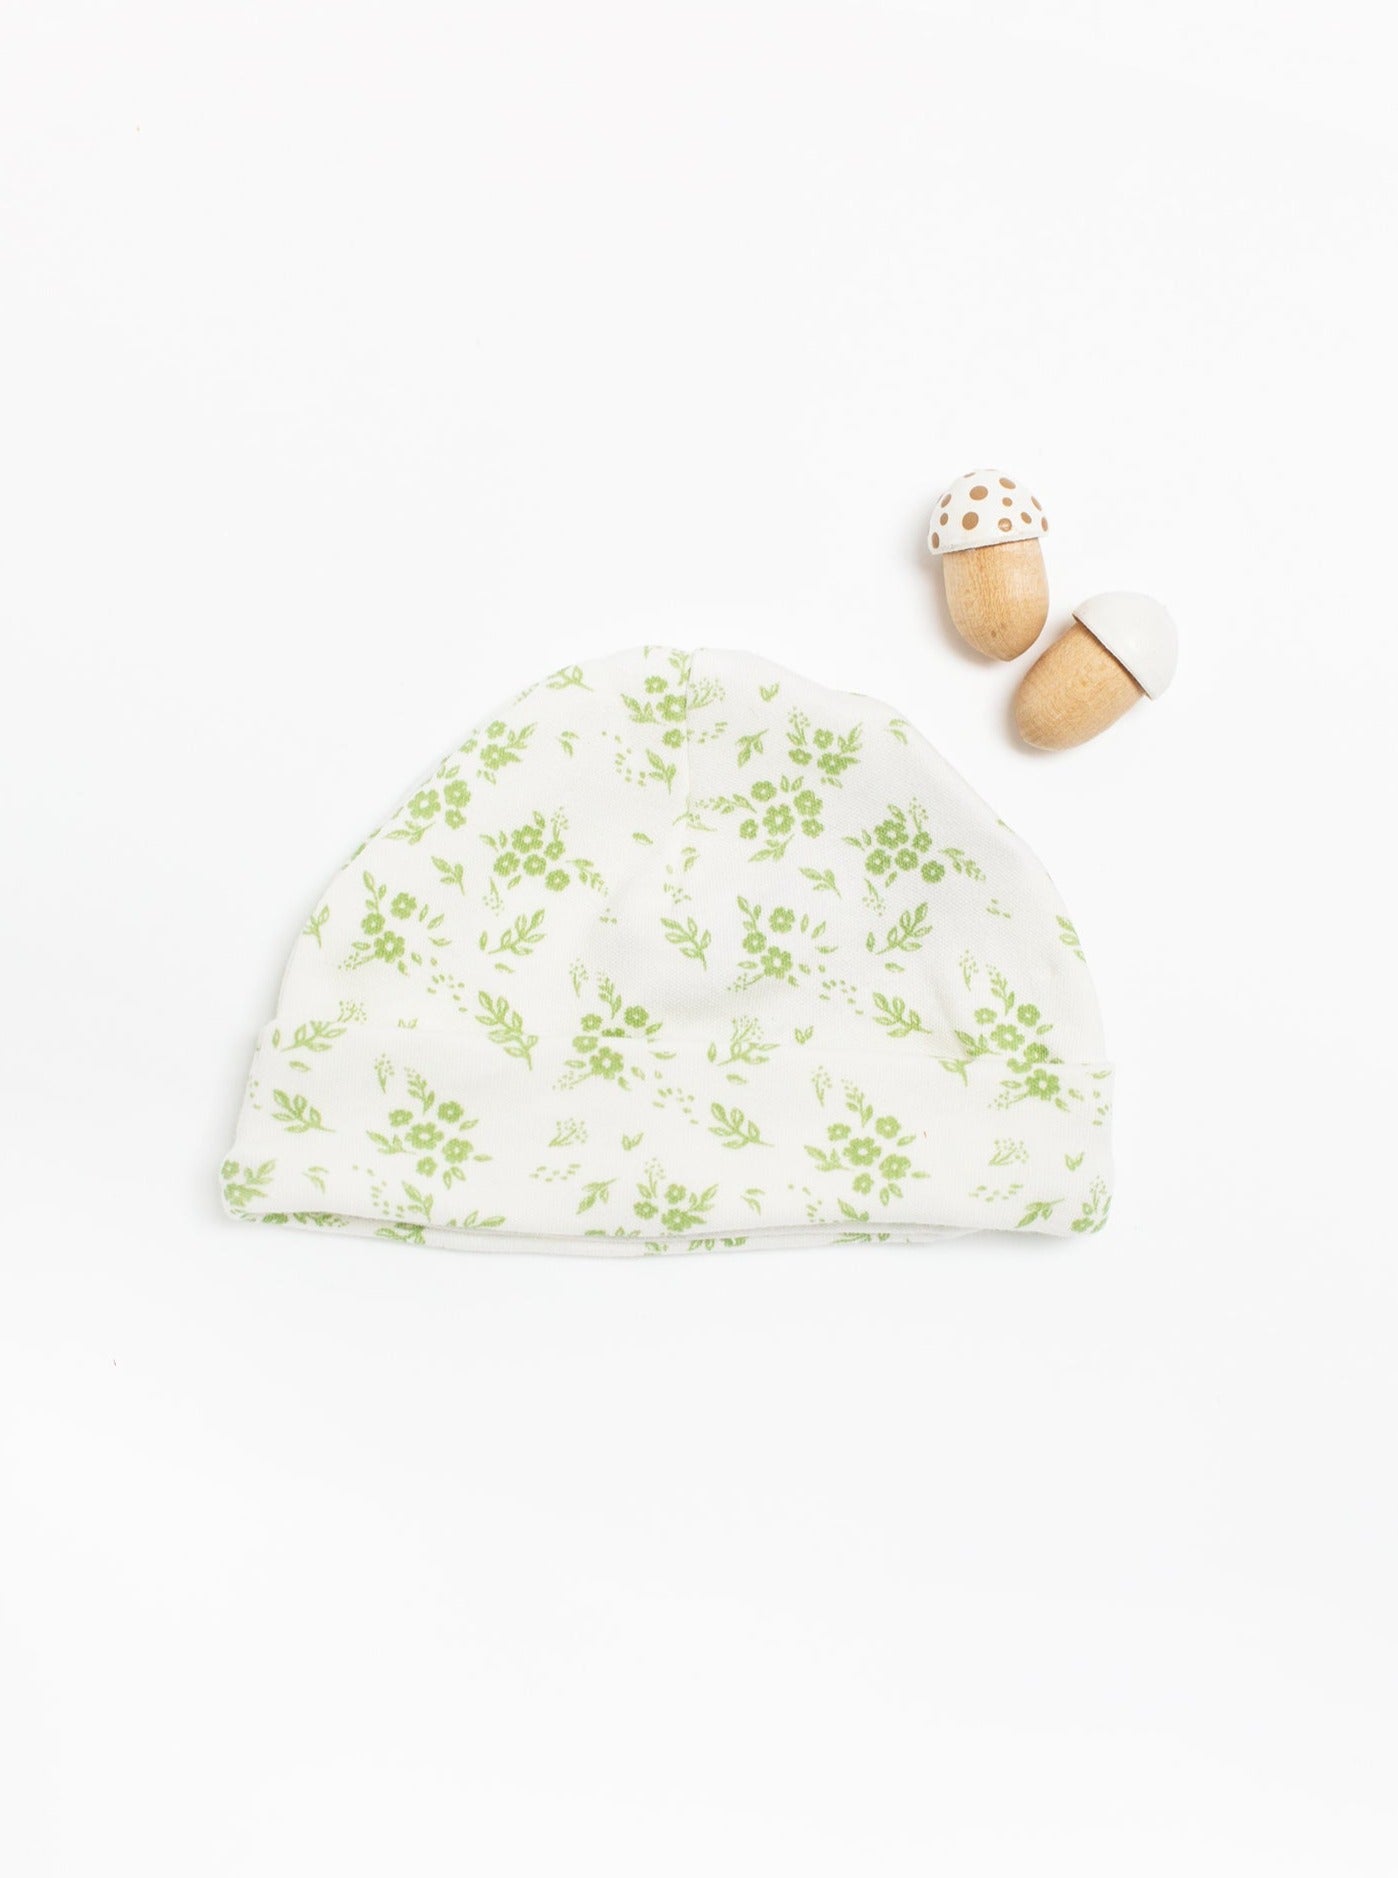 Preemie Hat, Apple Floral, Premium 100% Organic Cotton Hat Tiny & Small 